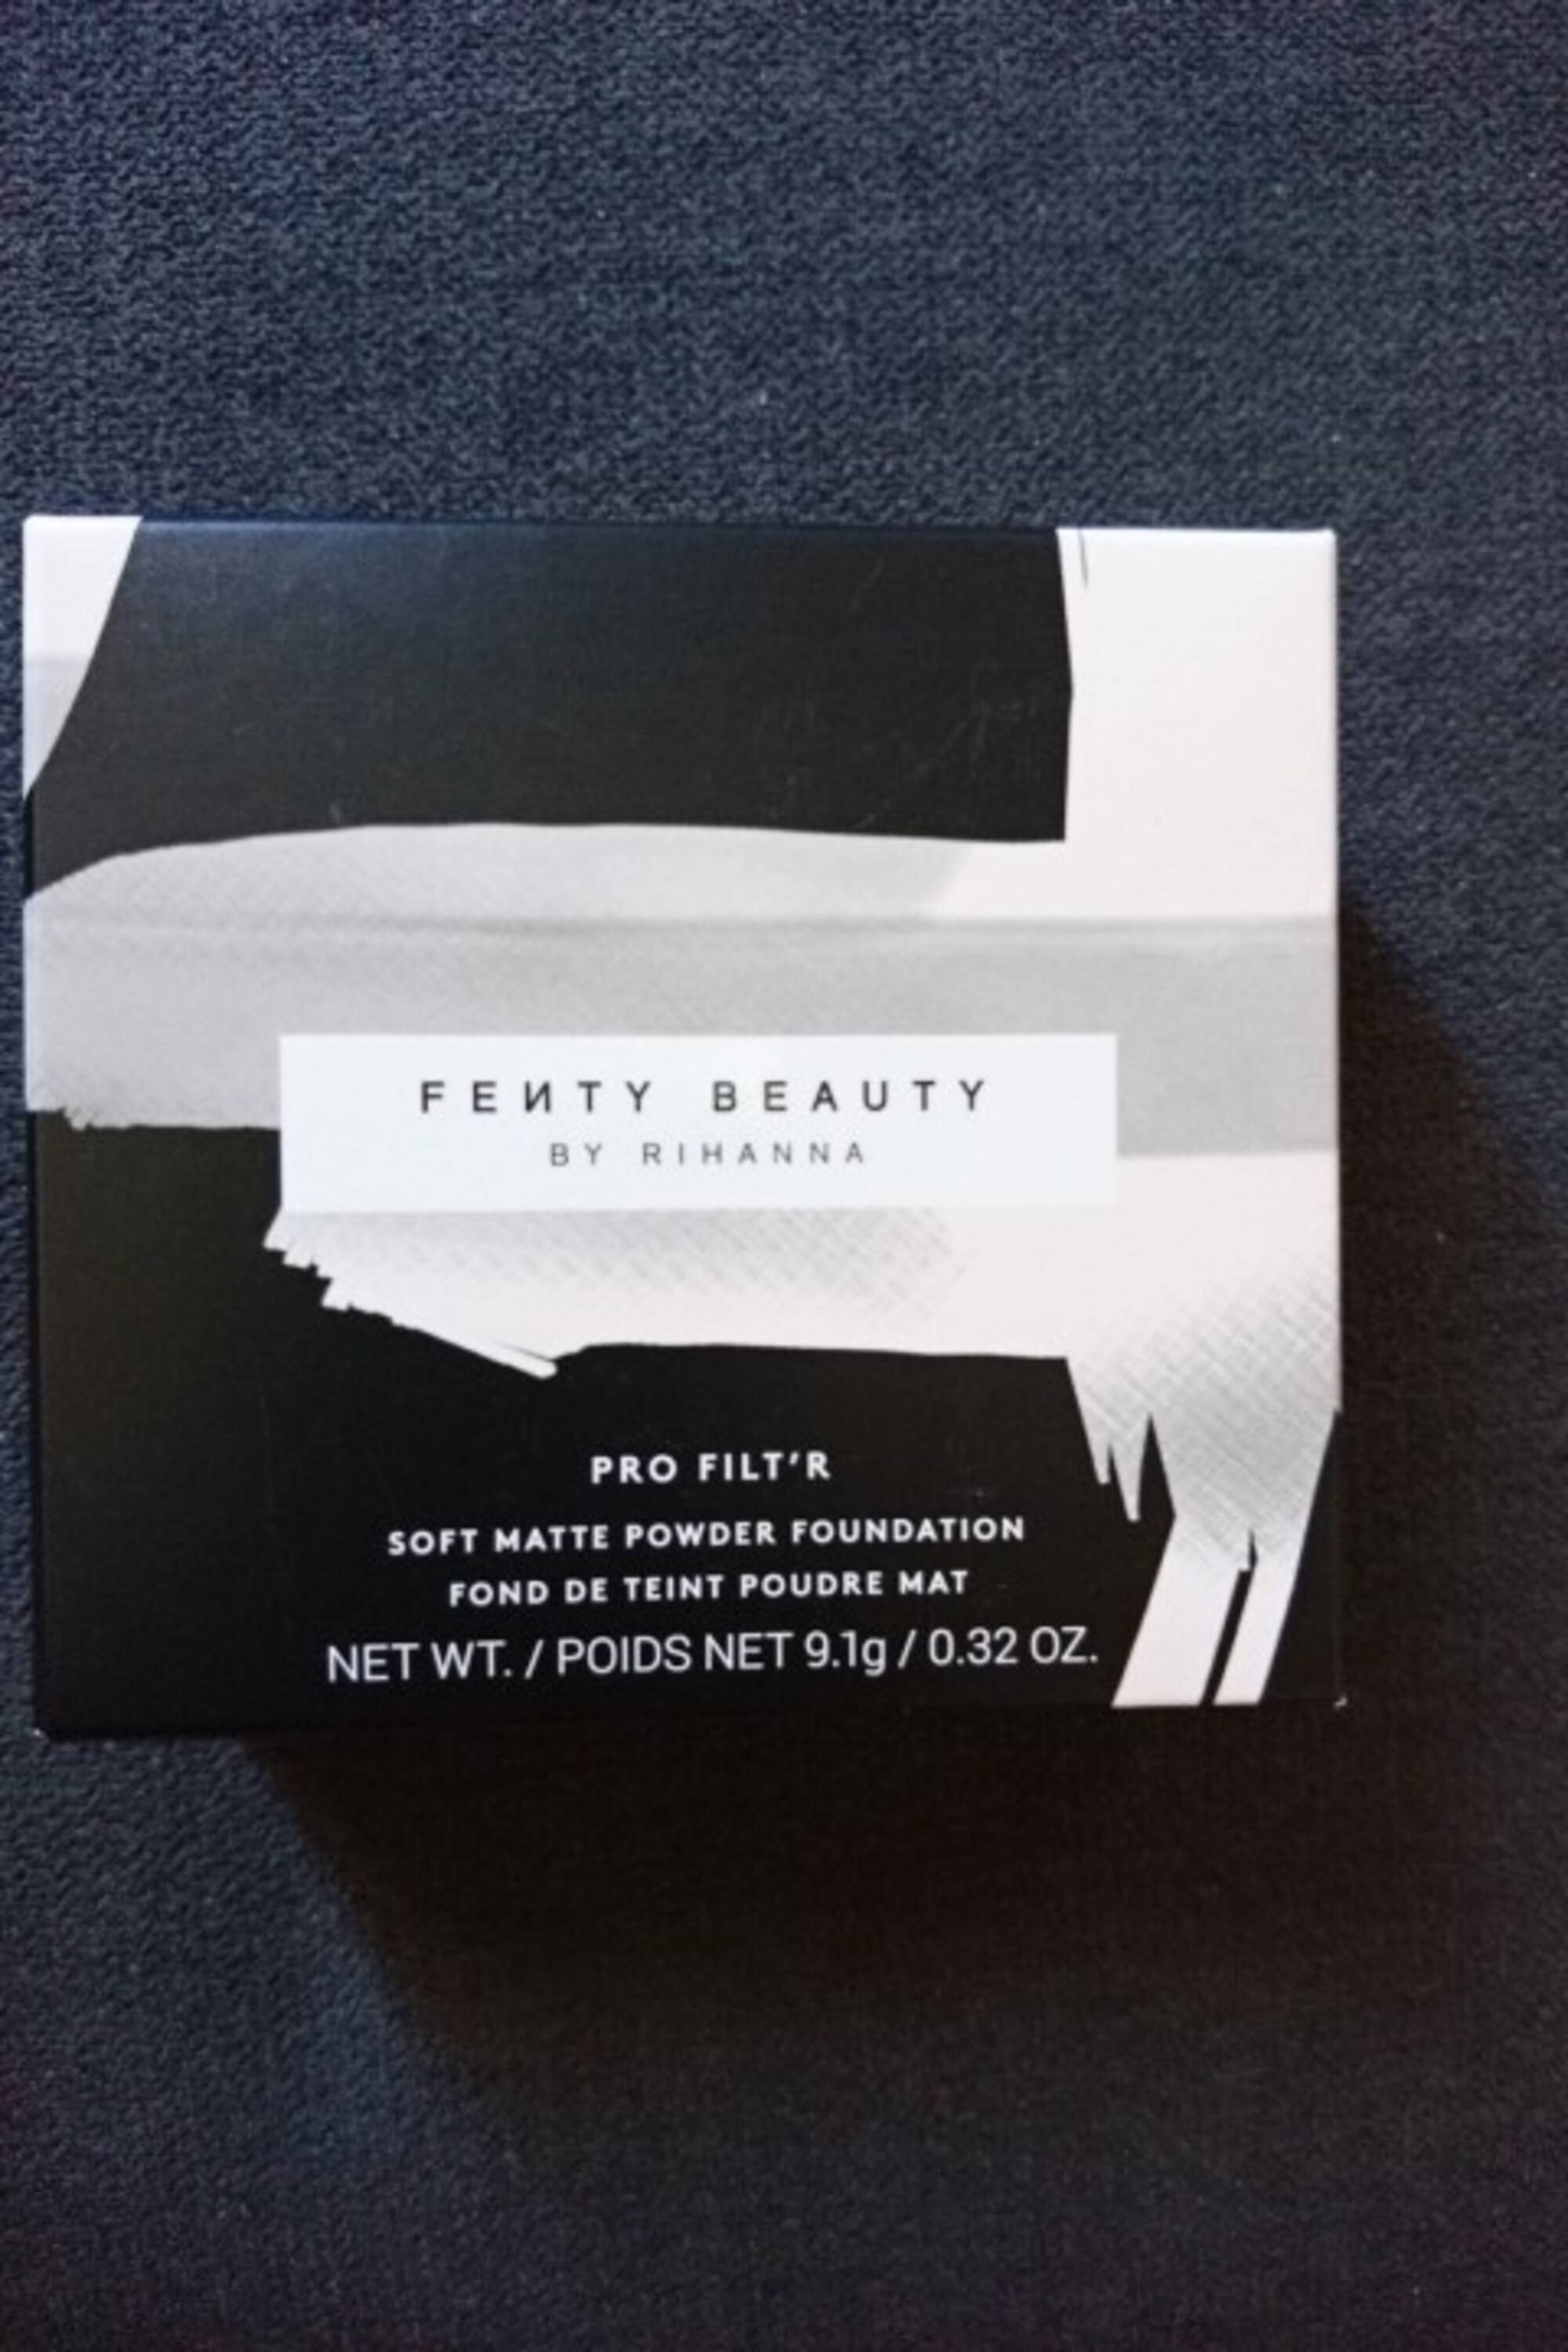 FENTY BEAUTY - Pro Filt'r - Fond de teint poudre mat